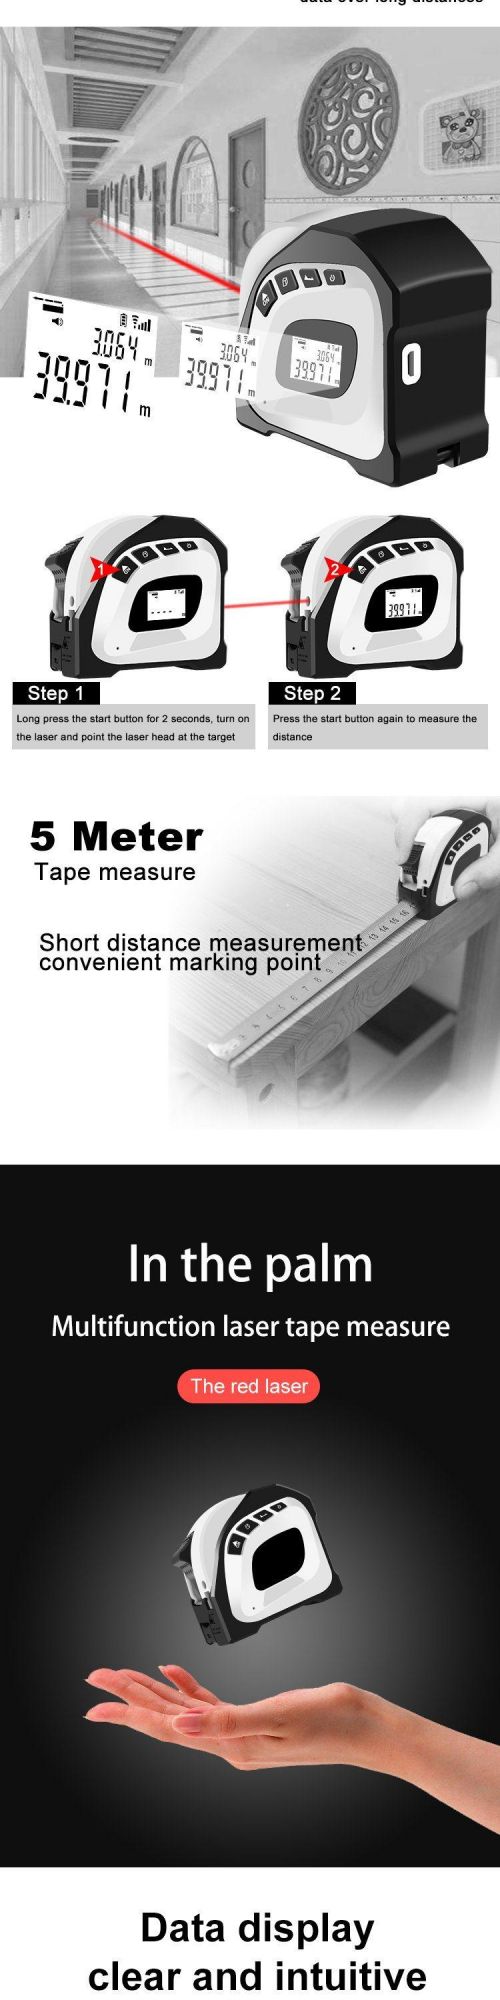 40m Distance Meter 5m Tape Measure Laser with Digital